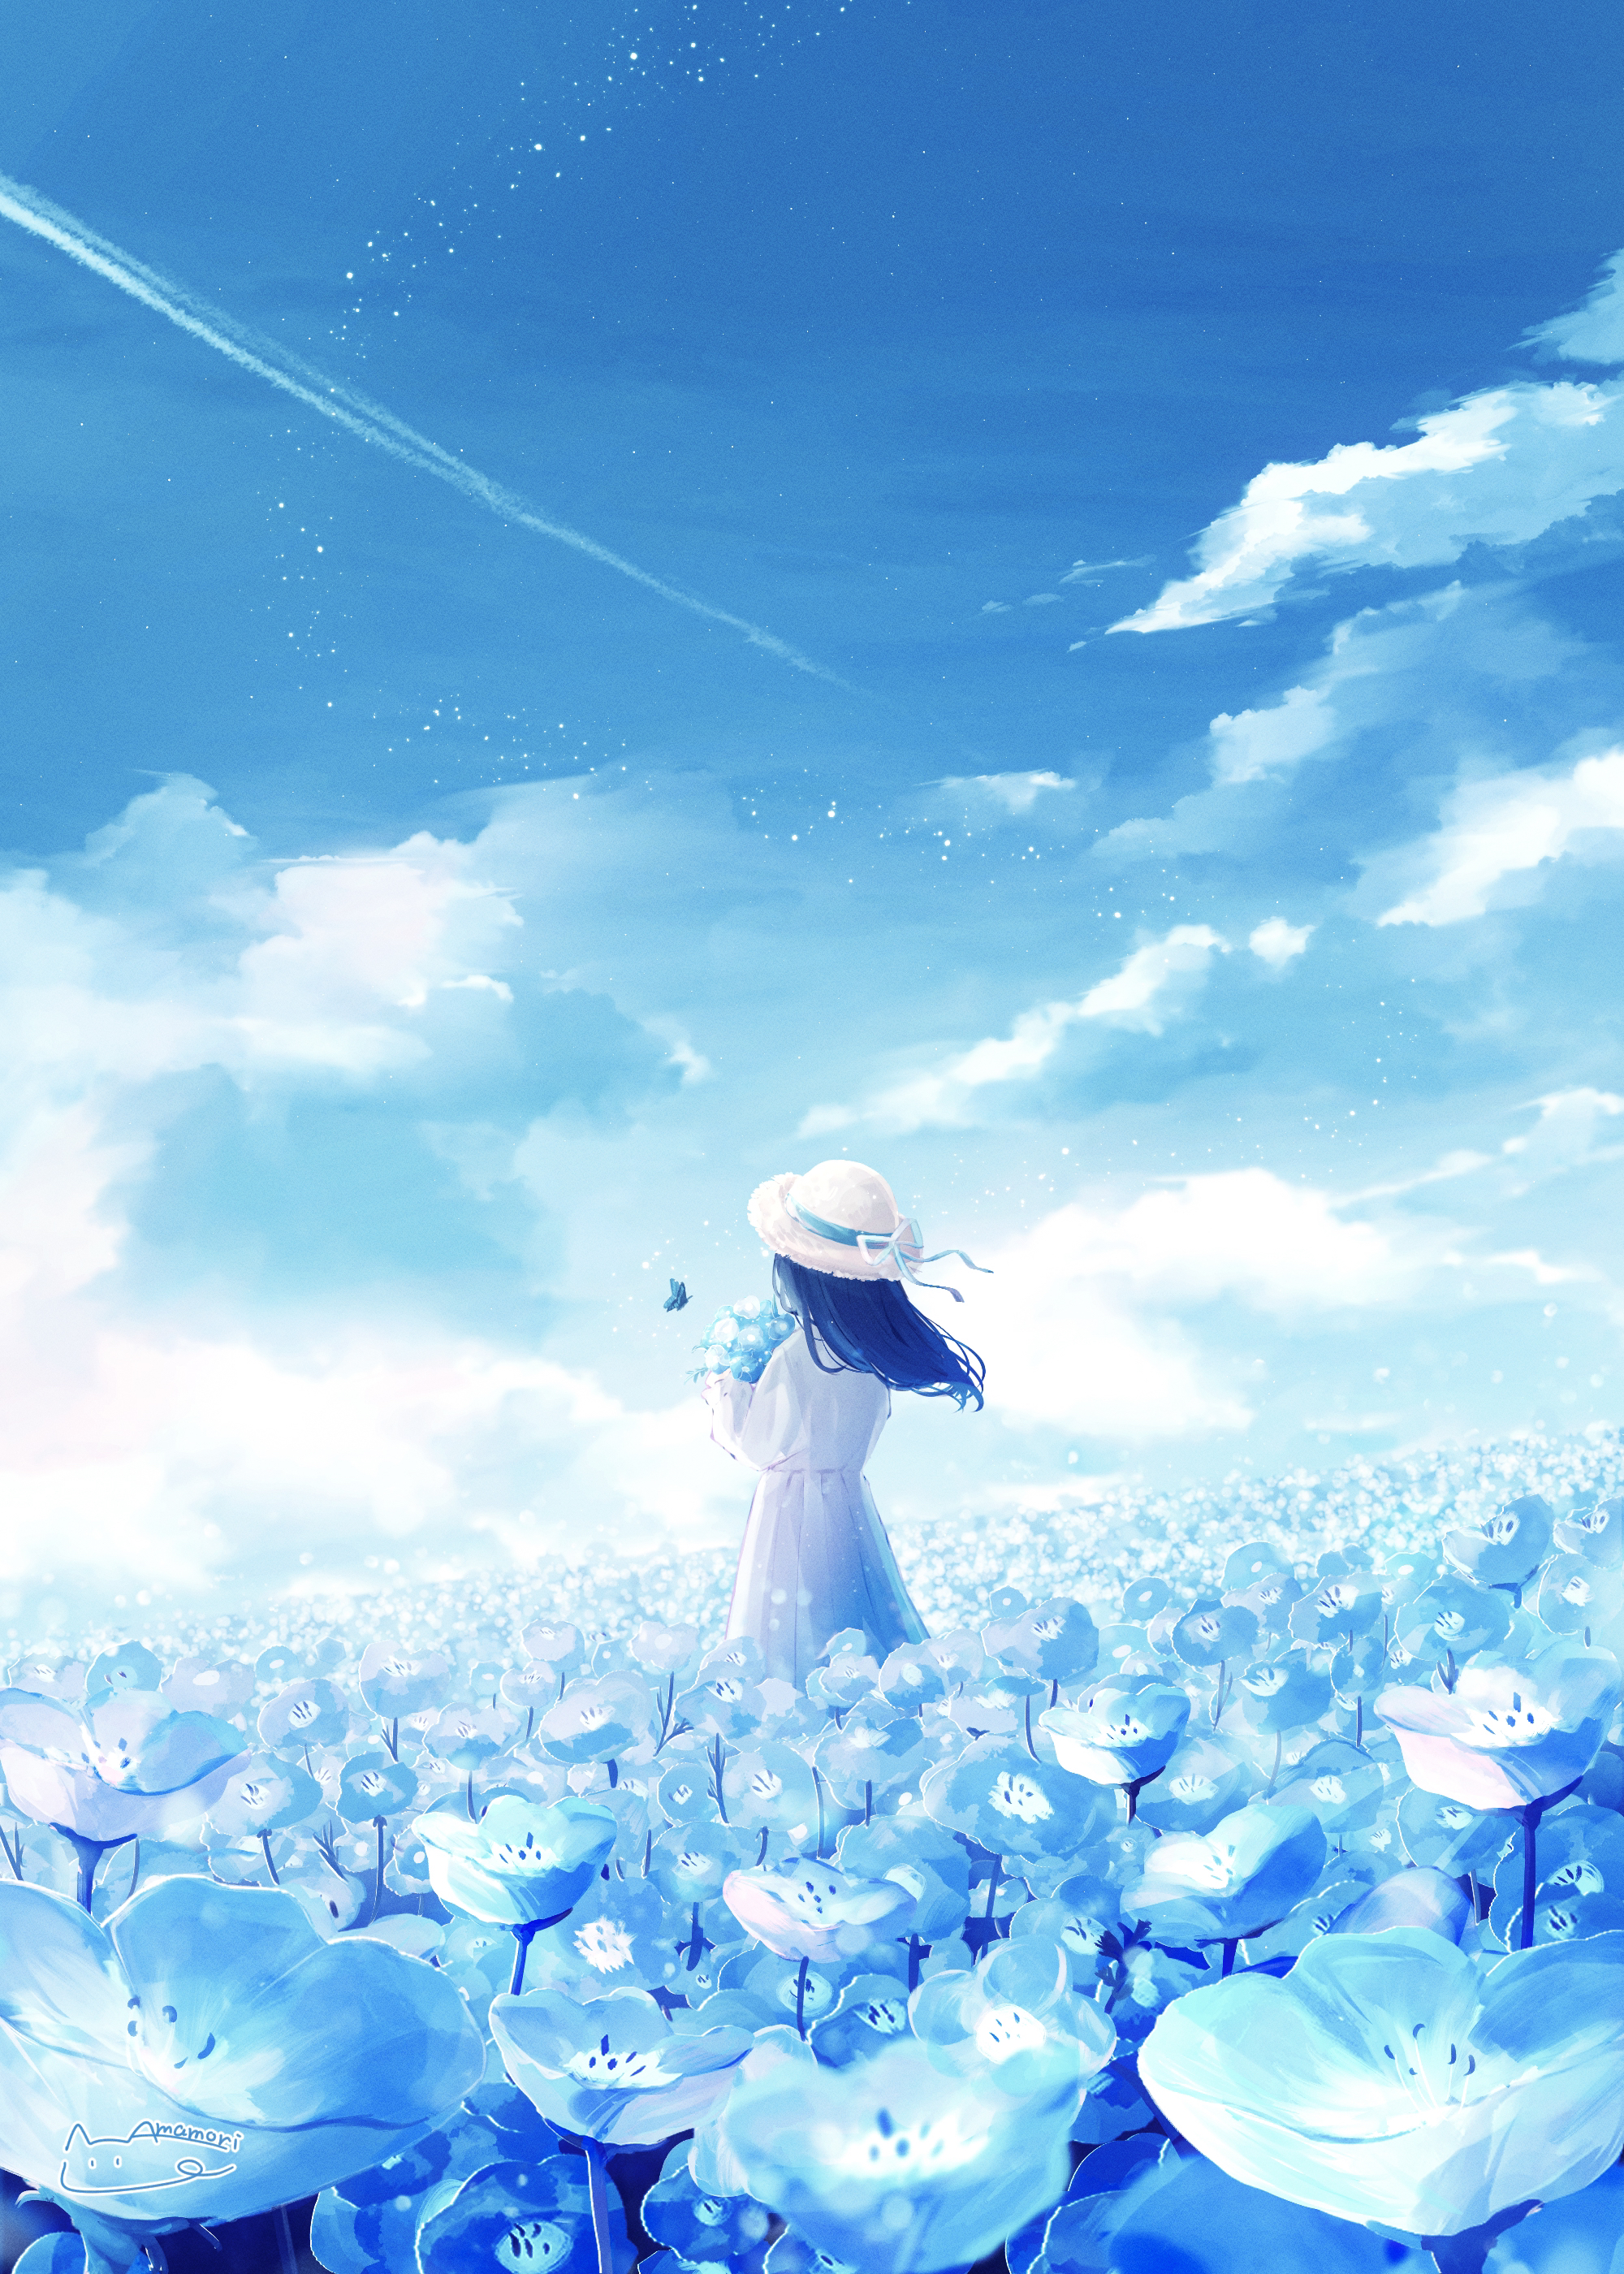 Anime 2000x2800 Amenomori Howa flowers white dress dark hair sun hats nemophila bouquet butterfly hat floating particles women outdoors sky clouds windy field